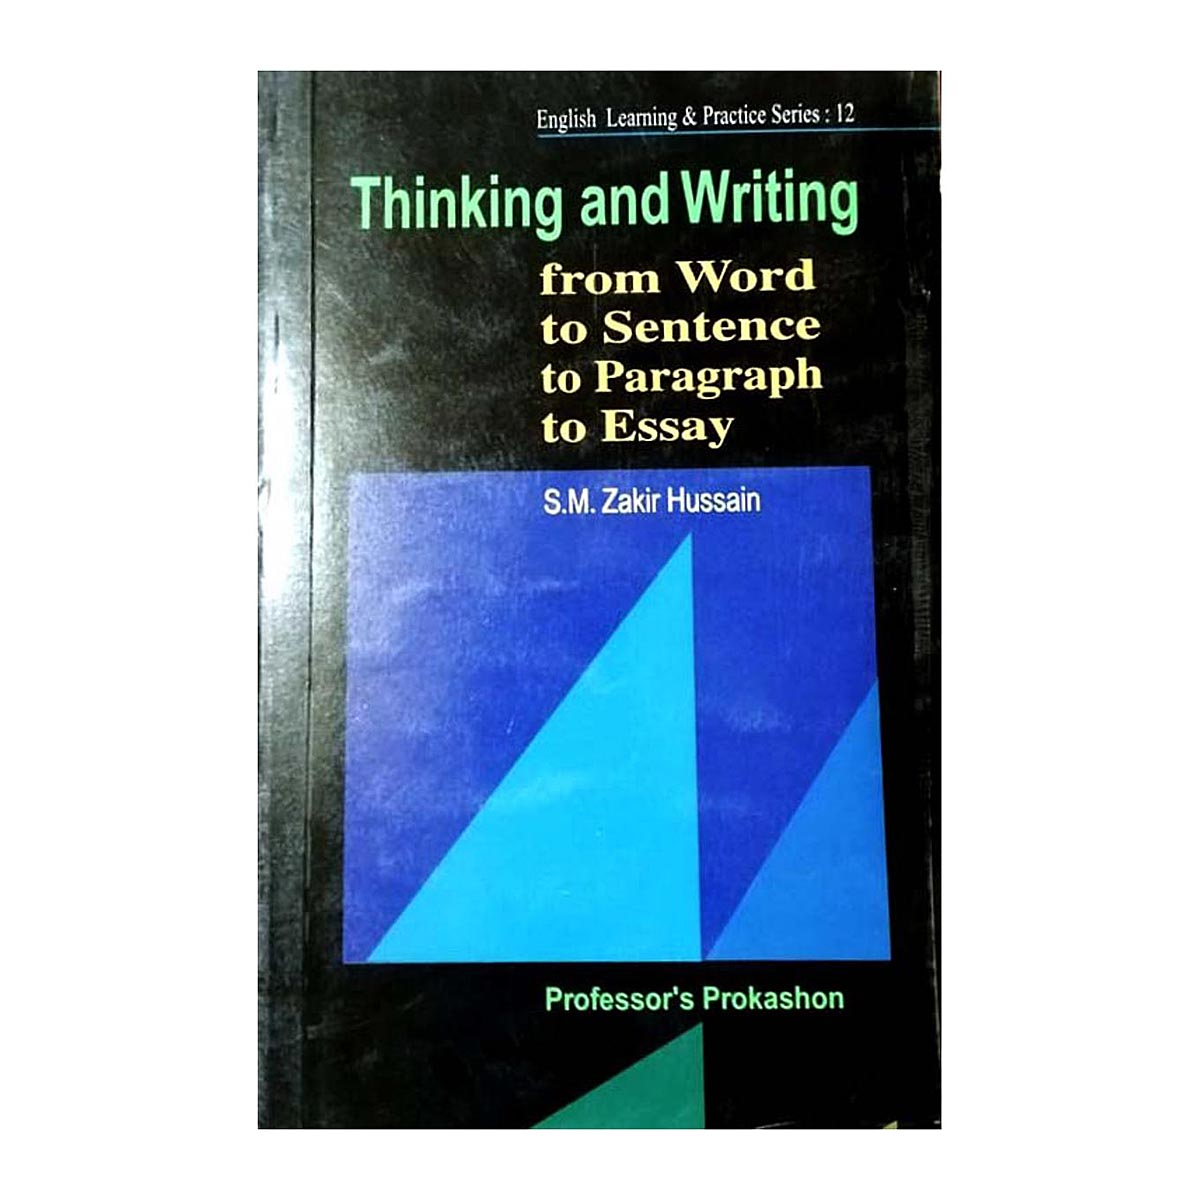 Thinking and Writing by S.M Zakir Hussain